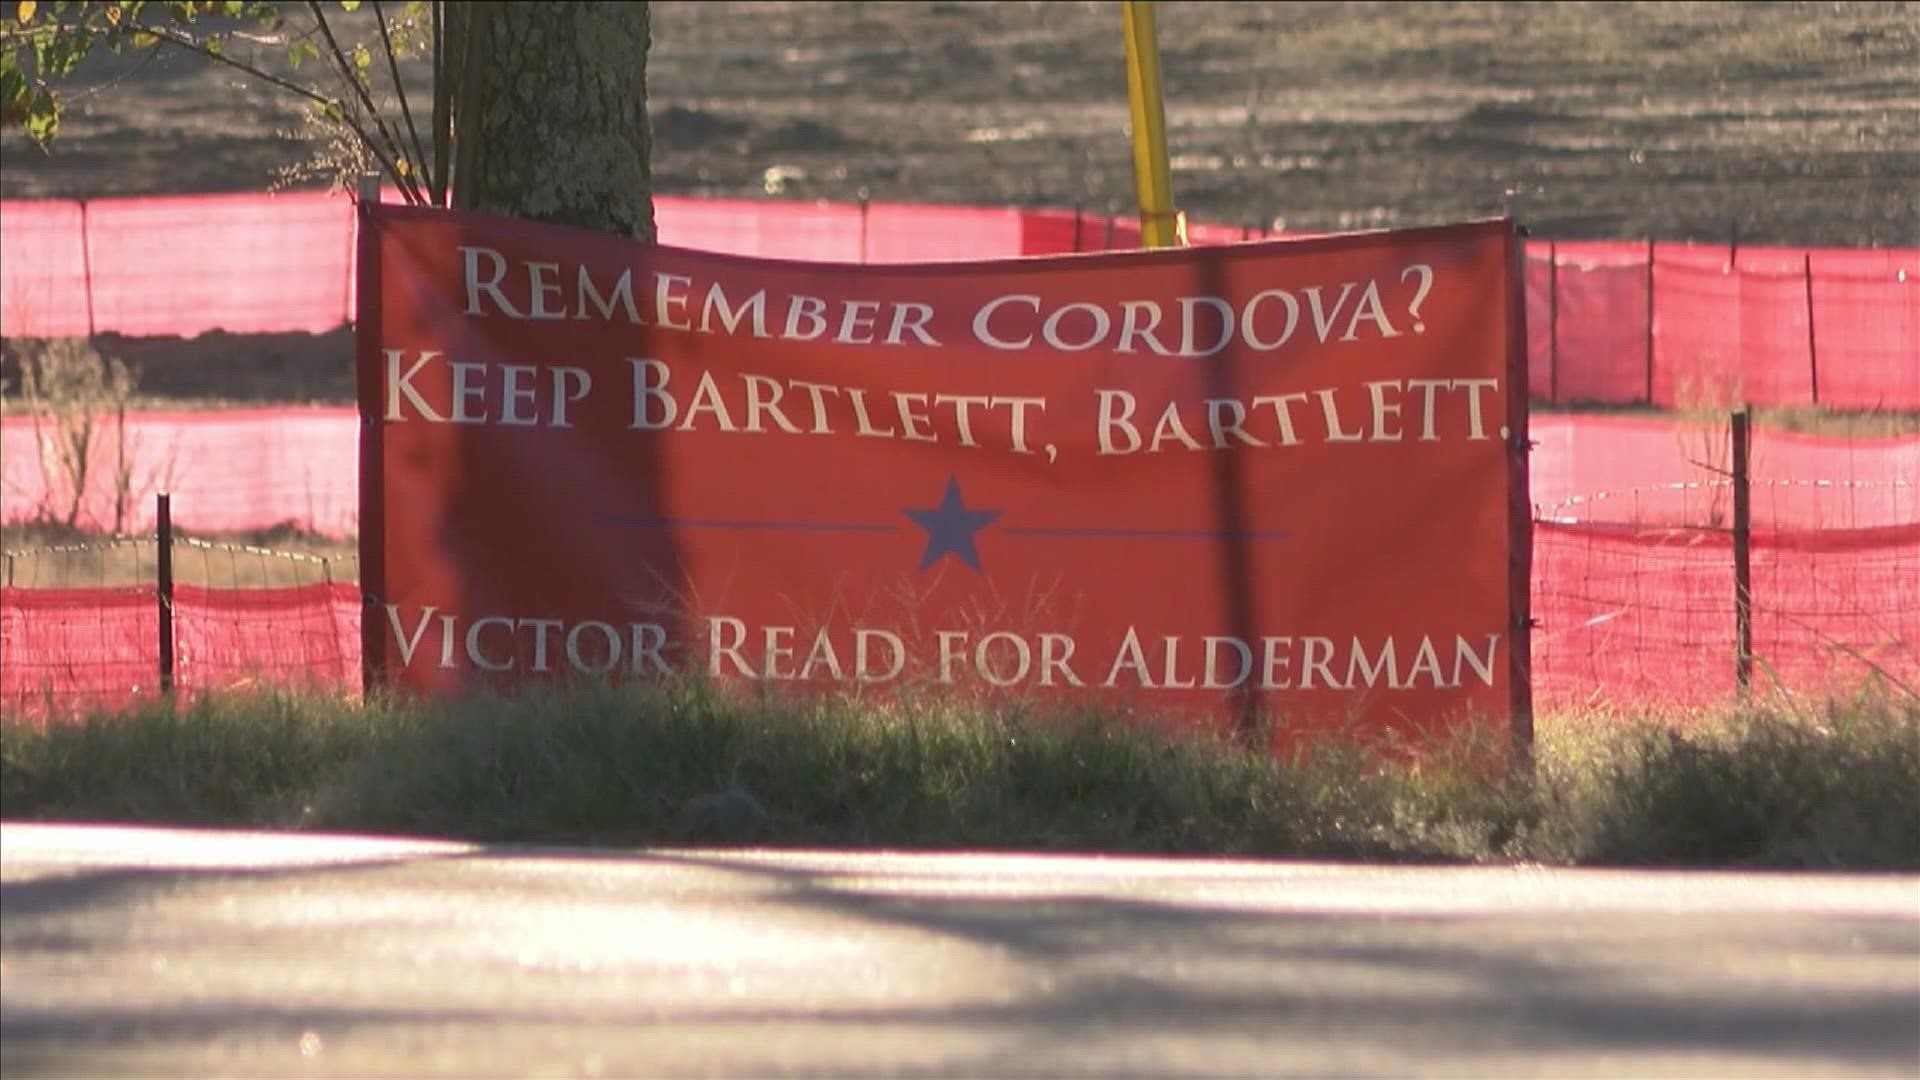 One alderman candidate sign states: "Remember Cordova? Keep Bartlett, Bartlett."